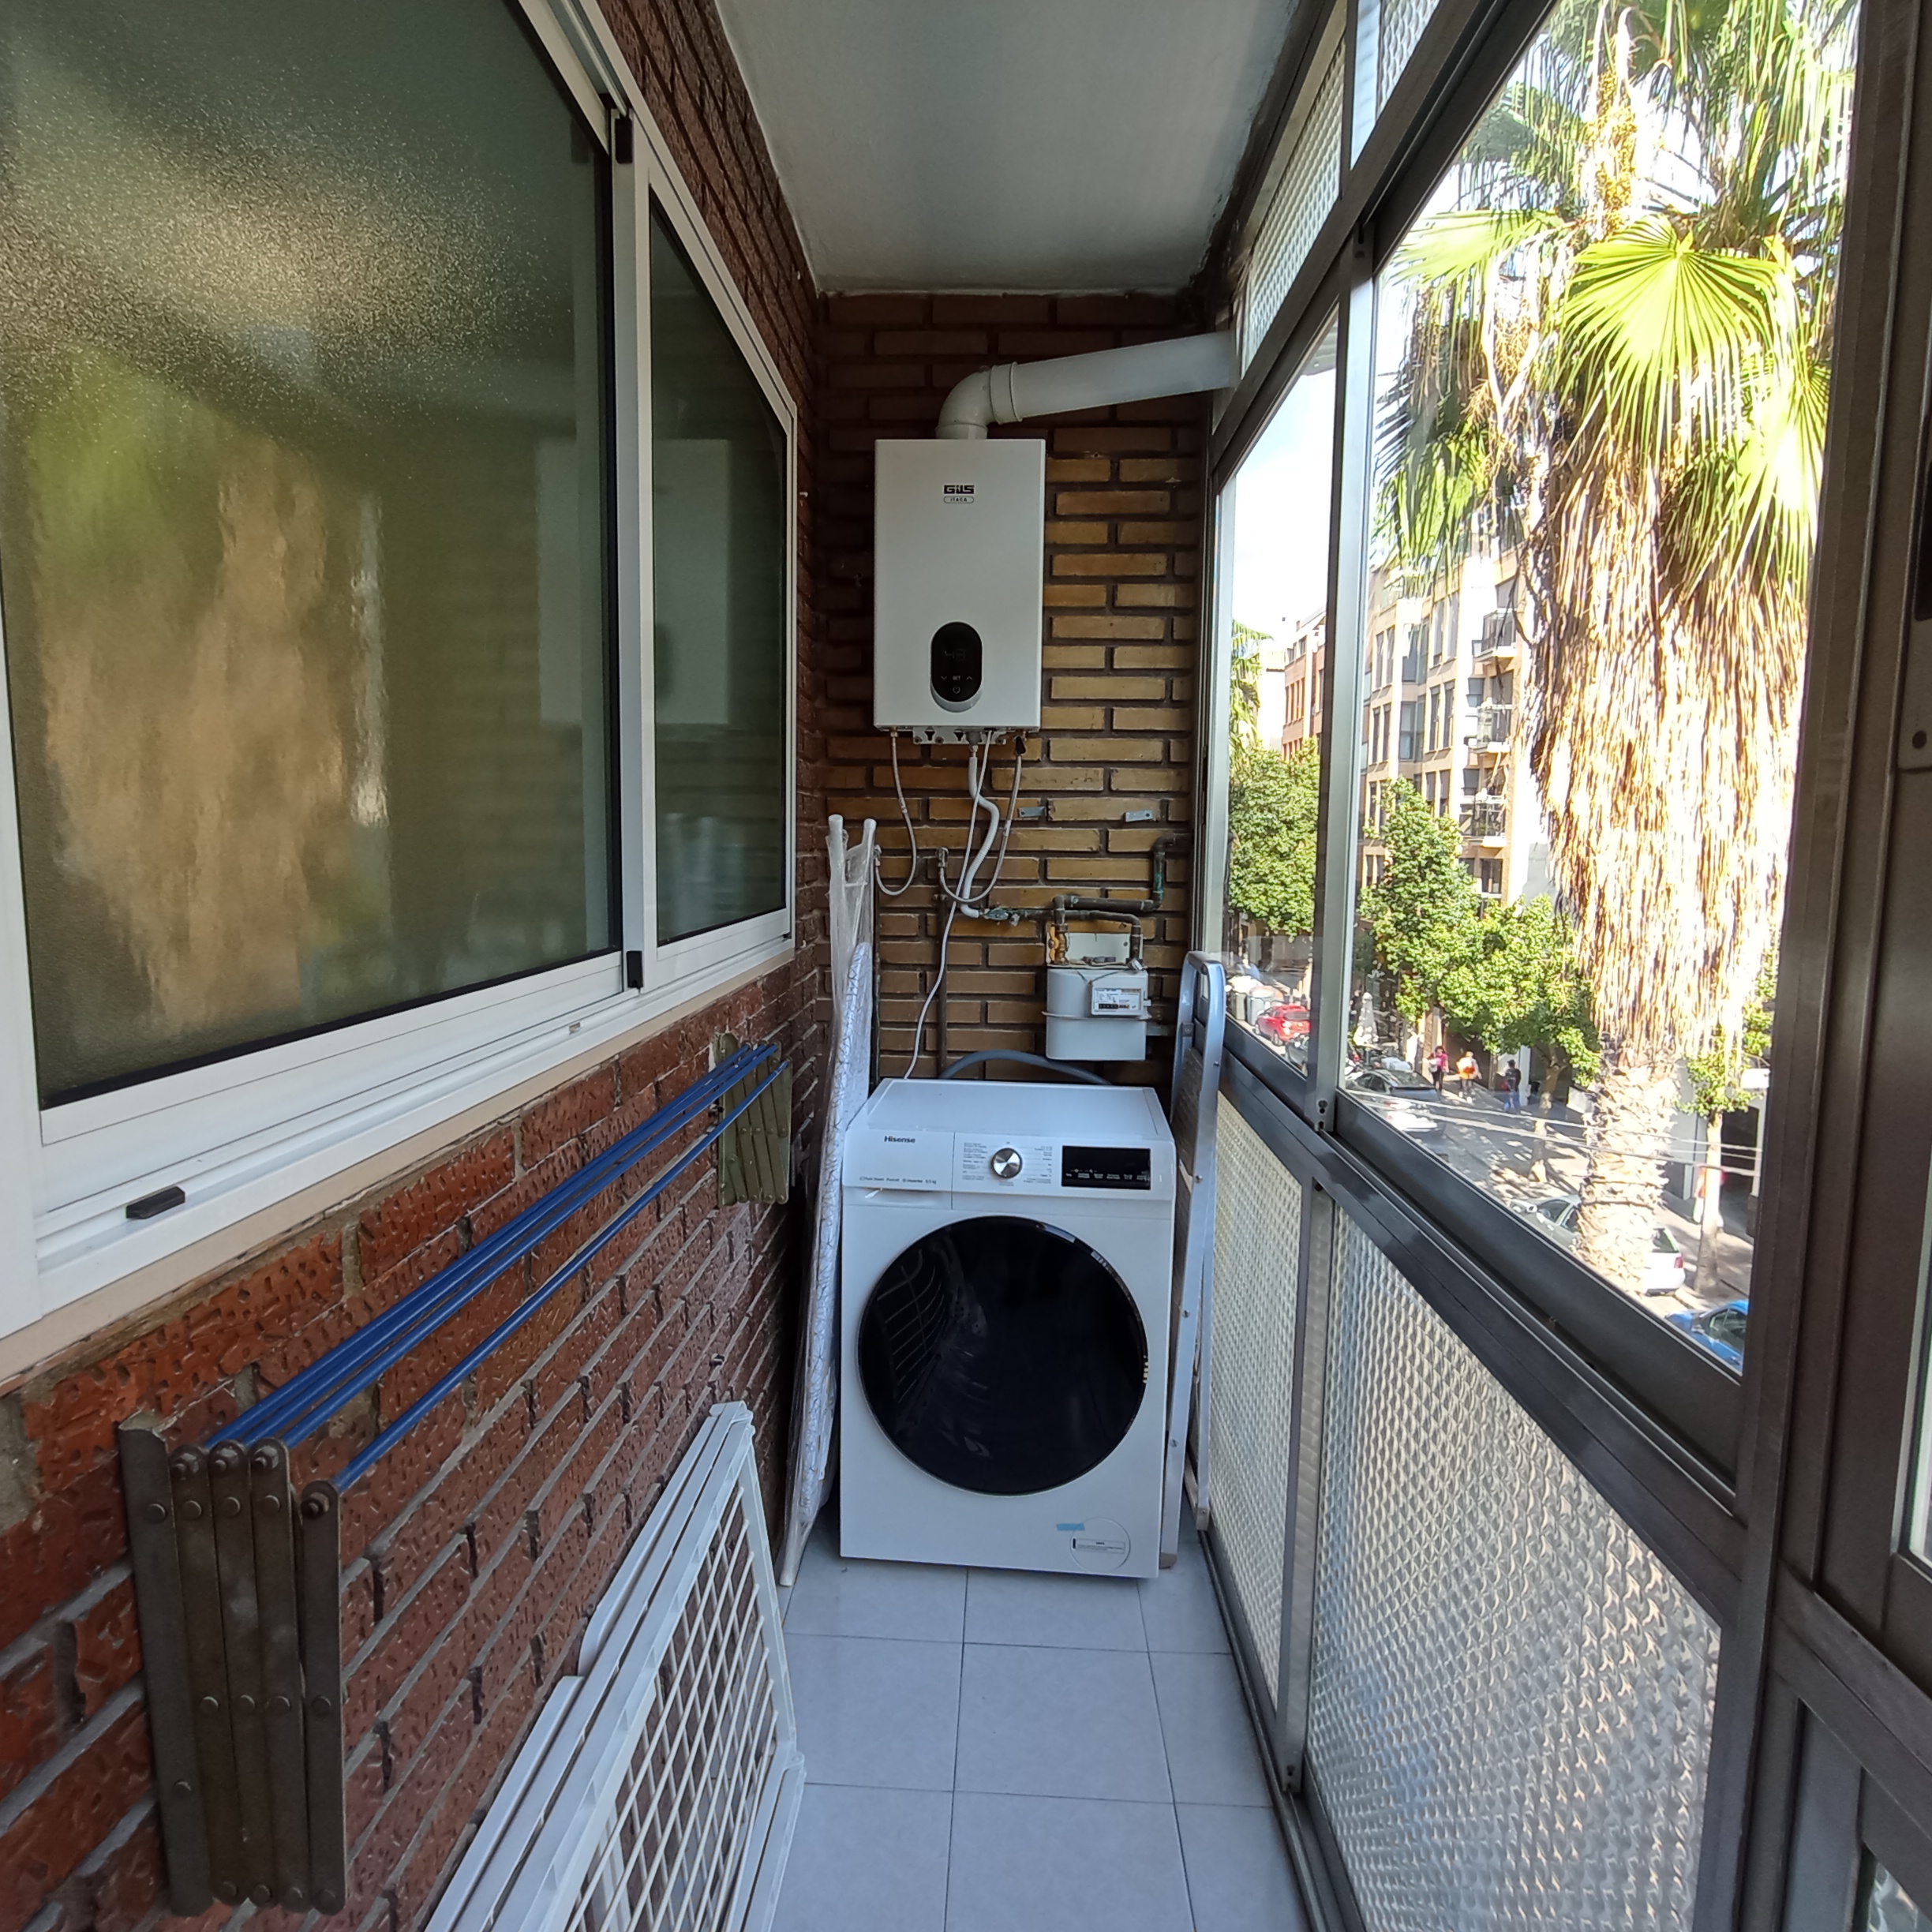 Trafalgar - 3 Bedroom apartment for rent in Valencia balcony 2